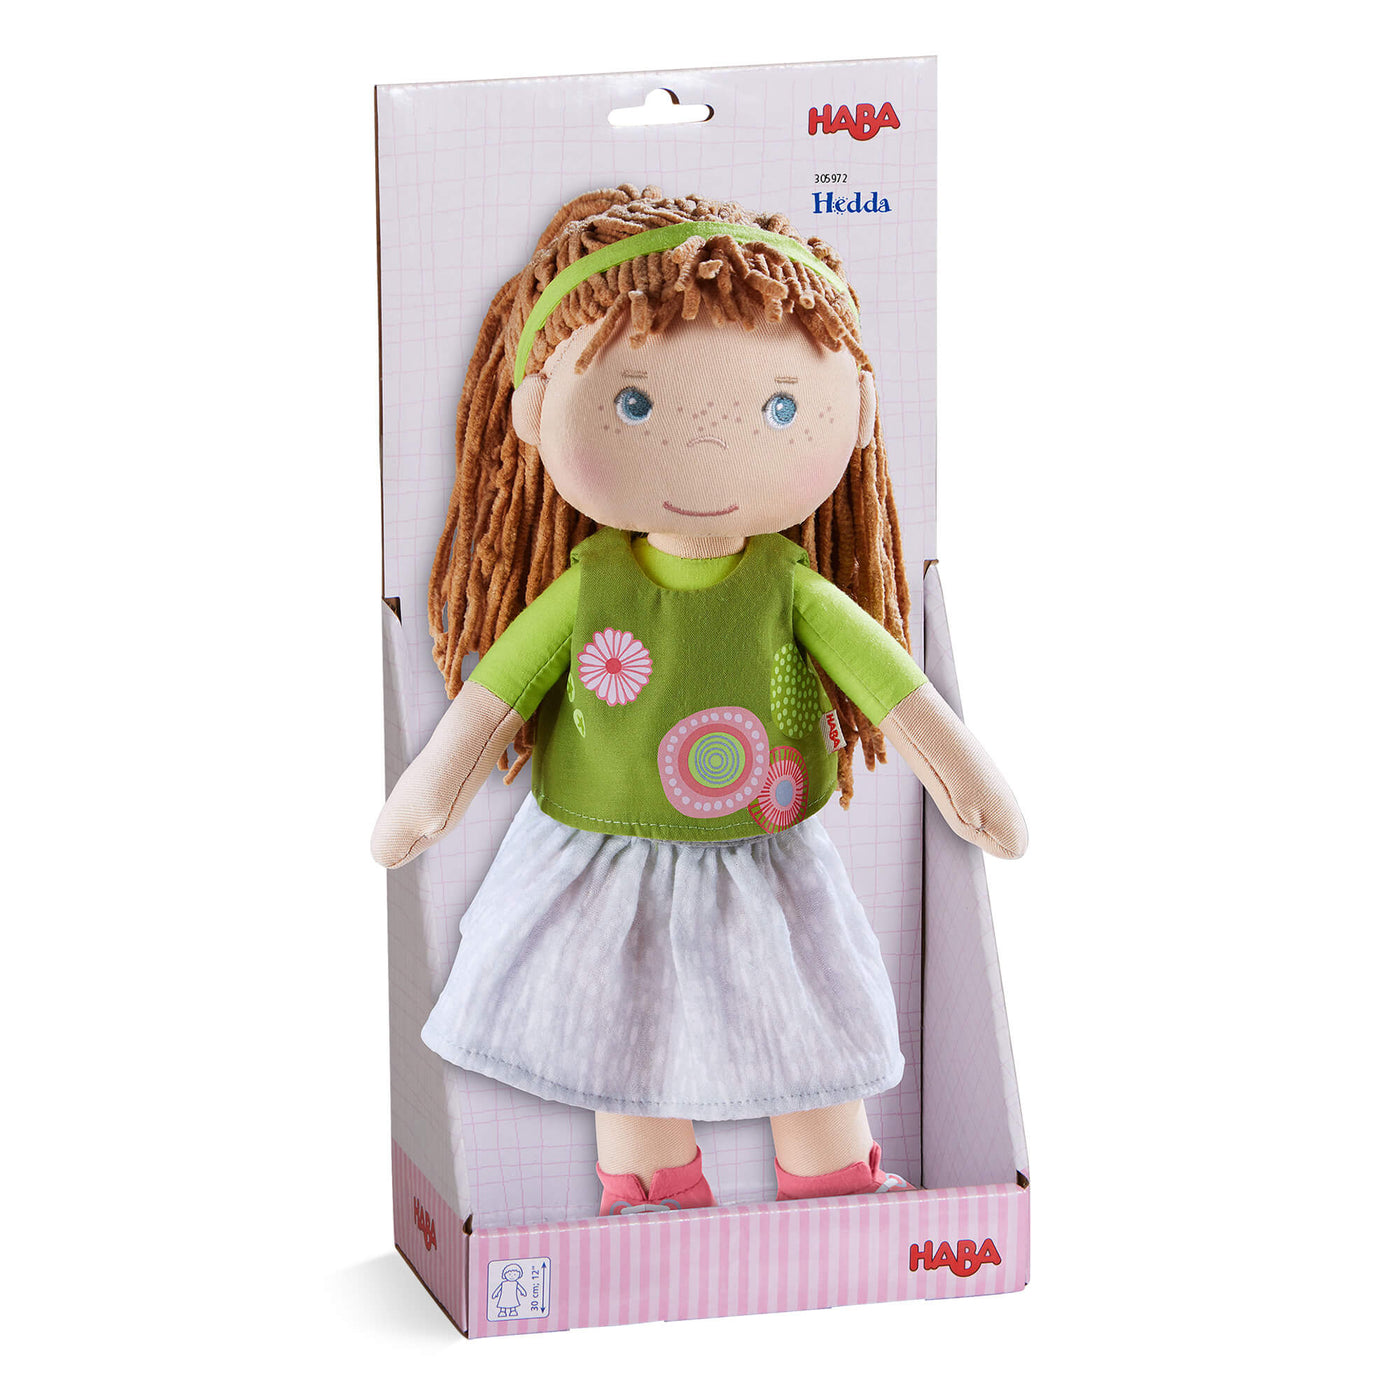 Hedda 12" Soft Doll - HABA USA